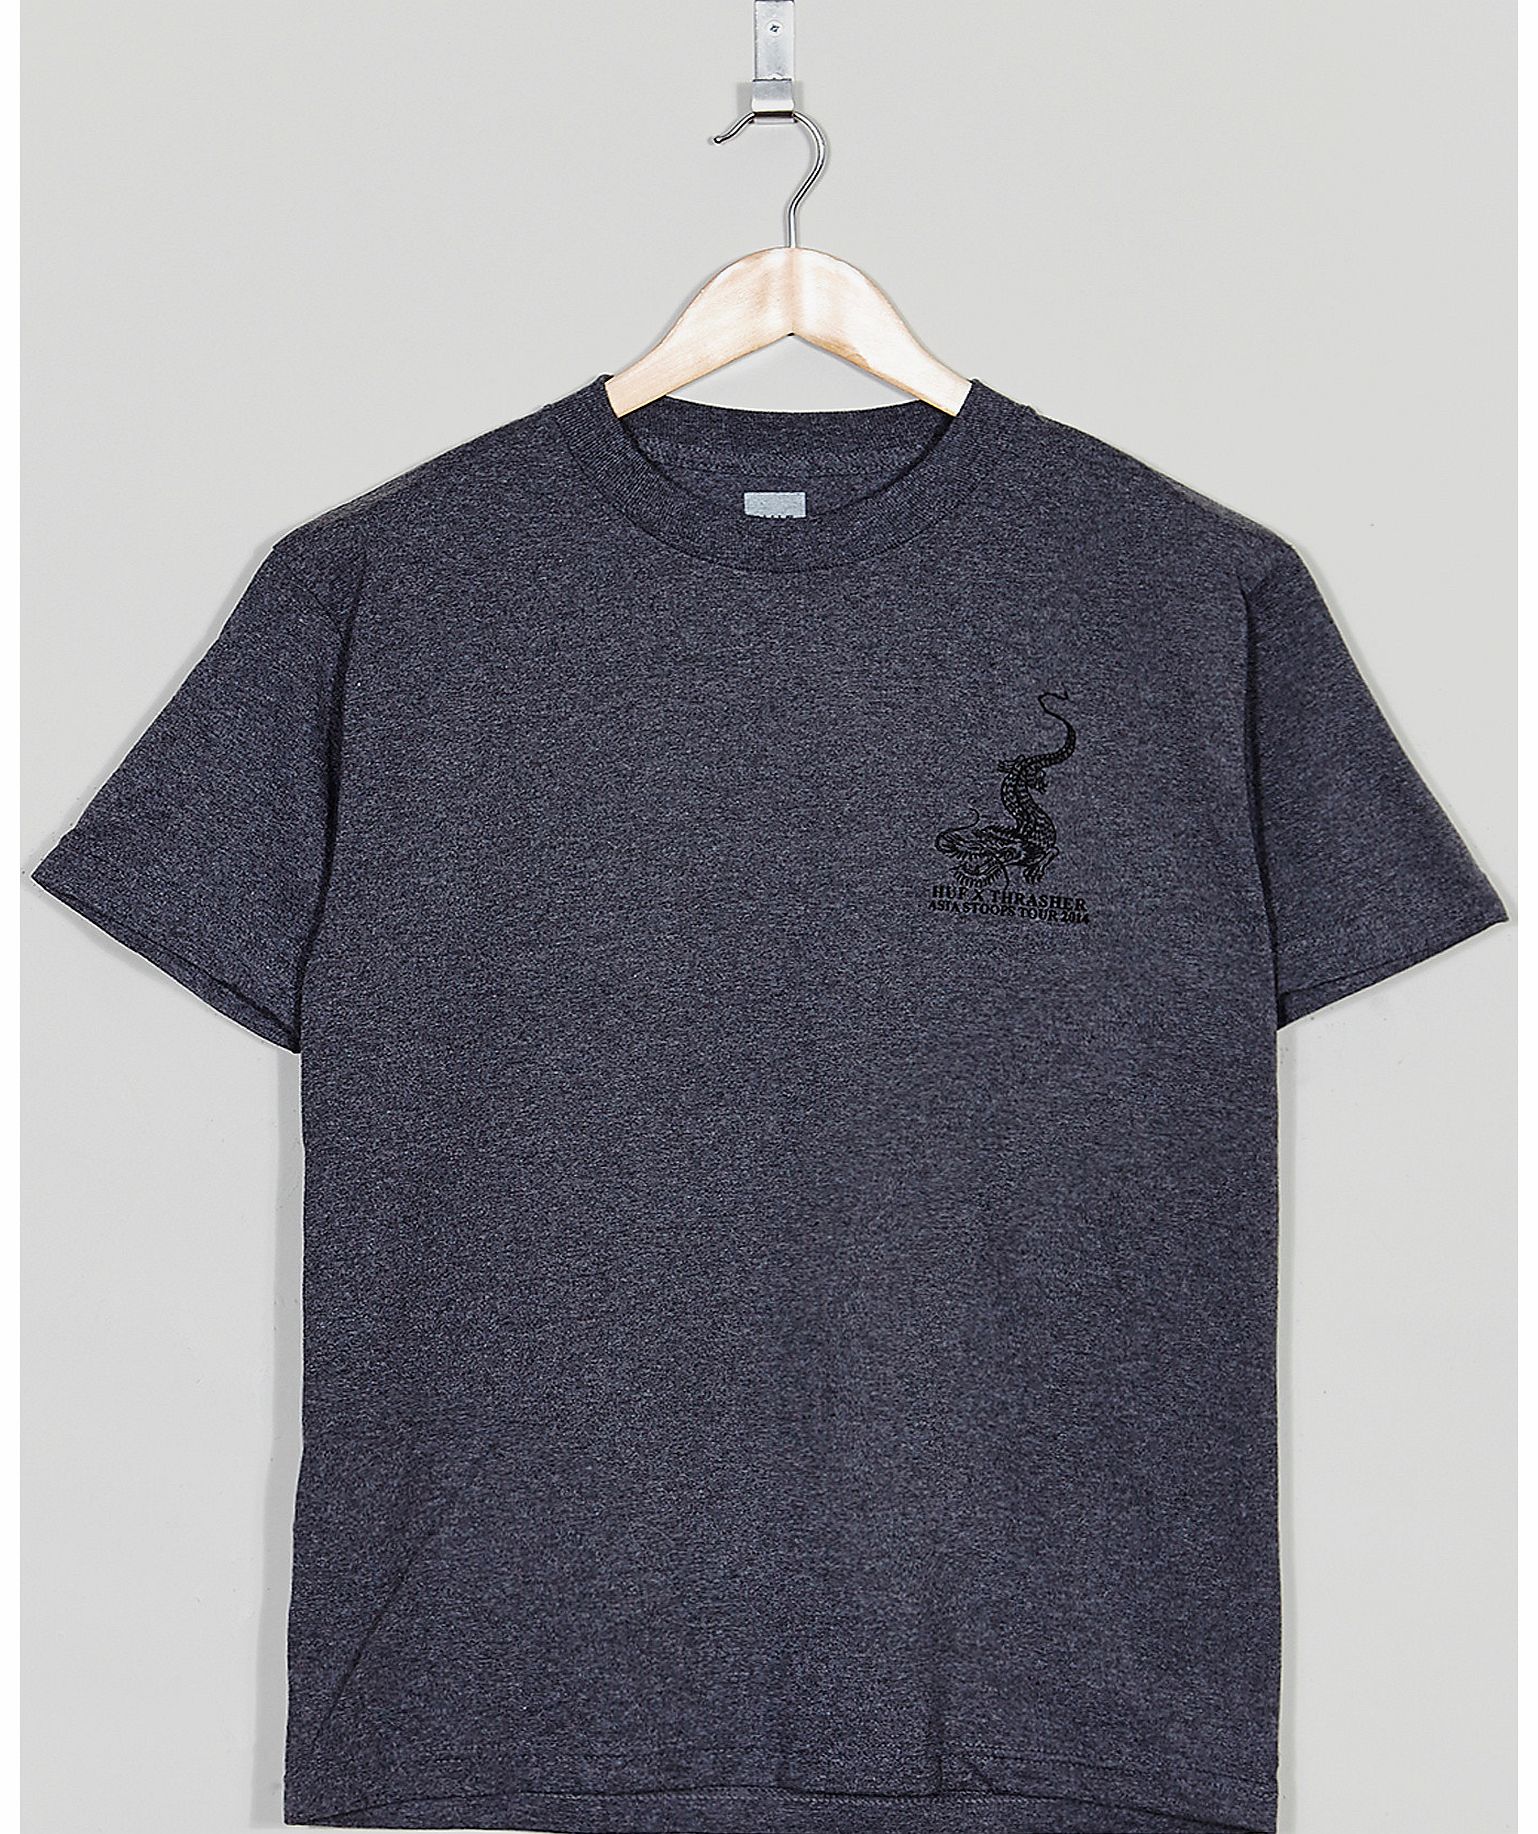 x Thrasher Souvenir T-Shirt